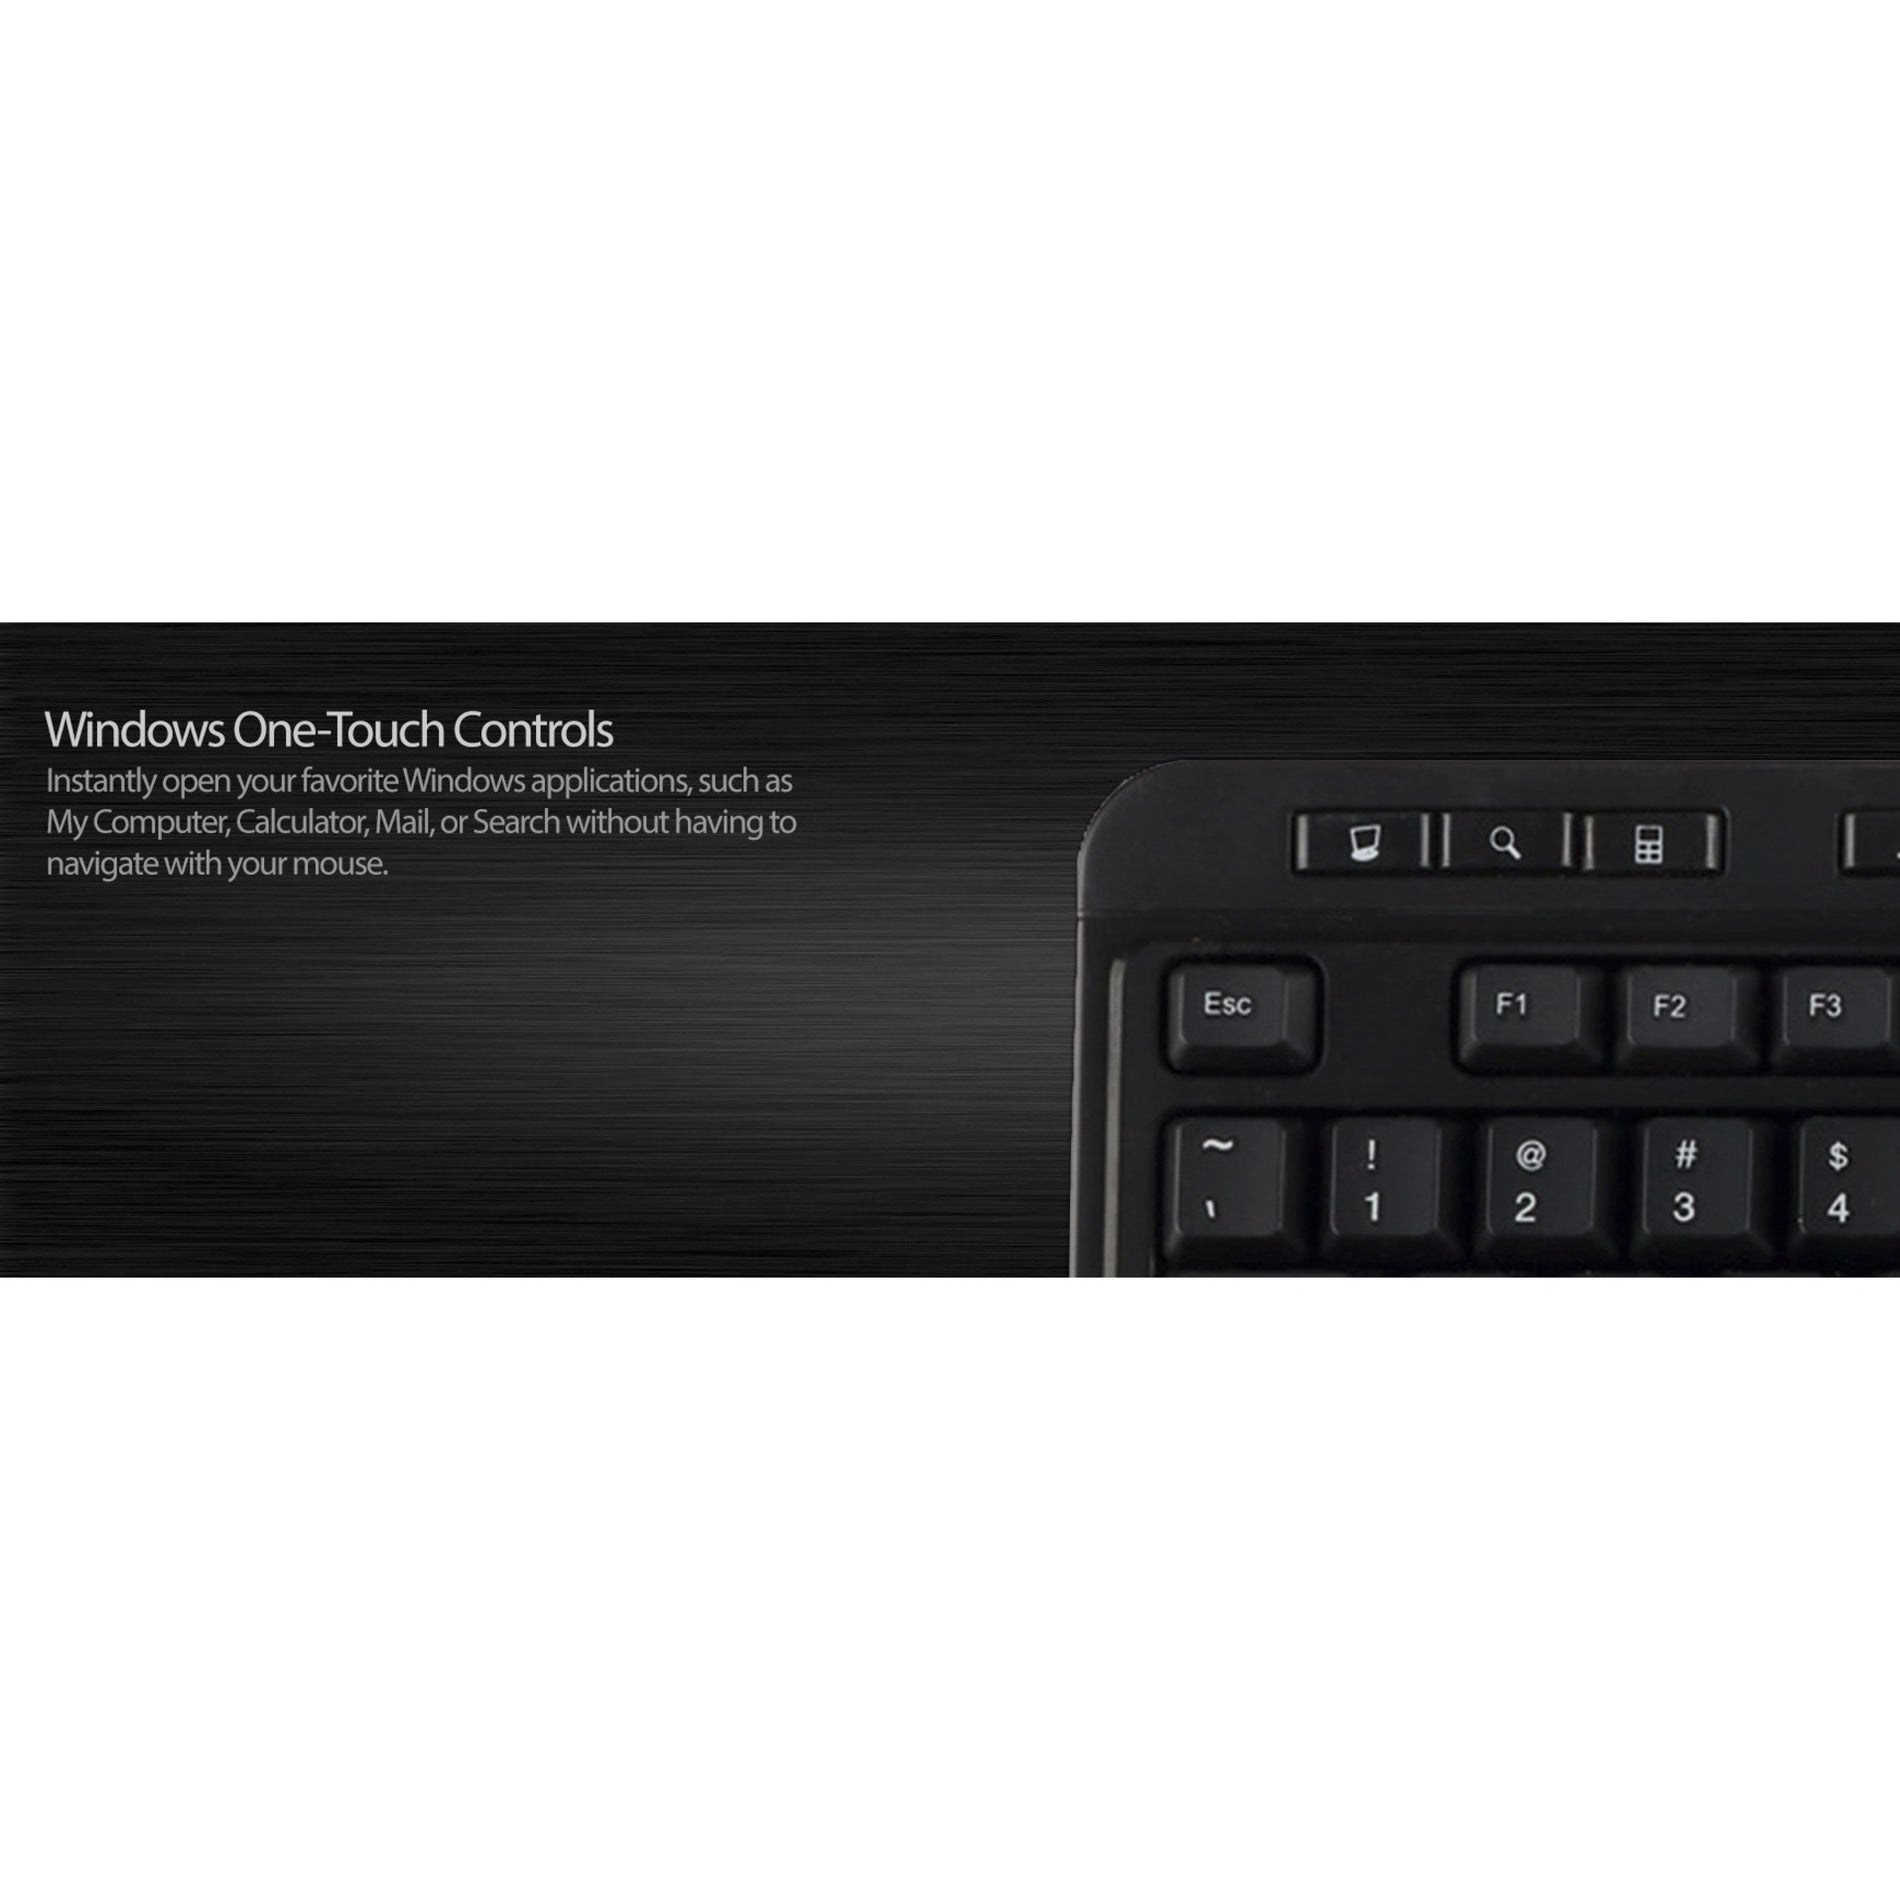 Adesso AKB-132HB Multimedia Desktop Keyboard with 3-Port USB Hub, Plug & Play, Quiet Keys